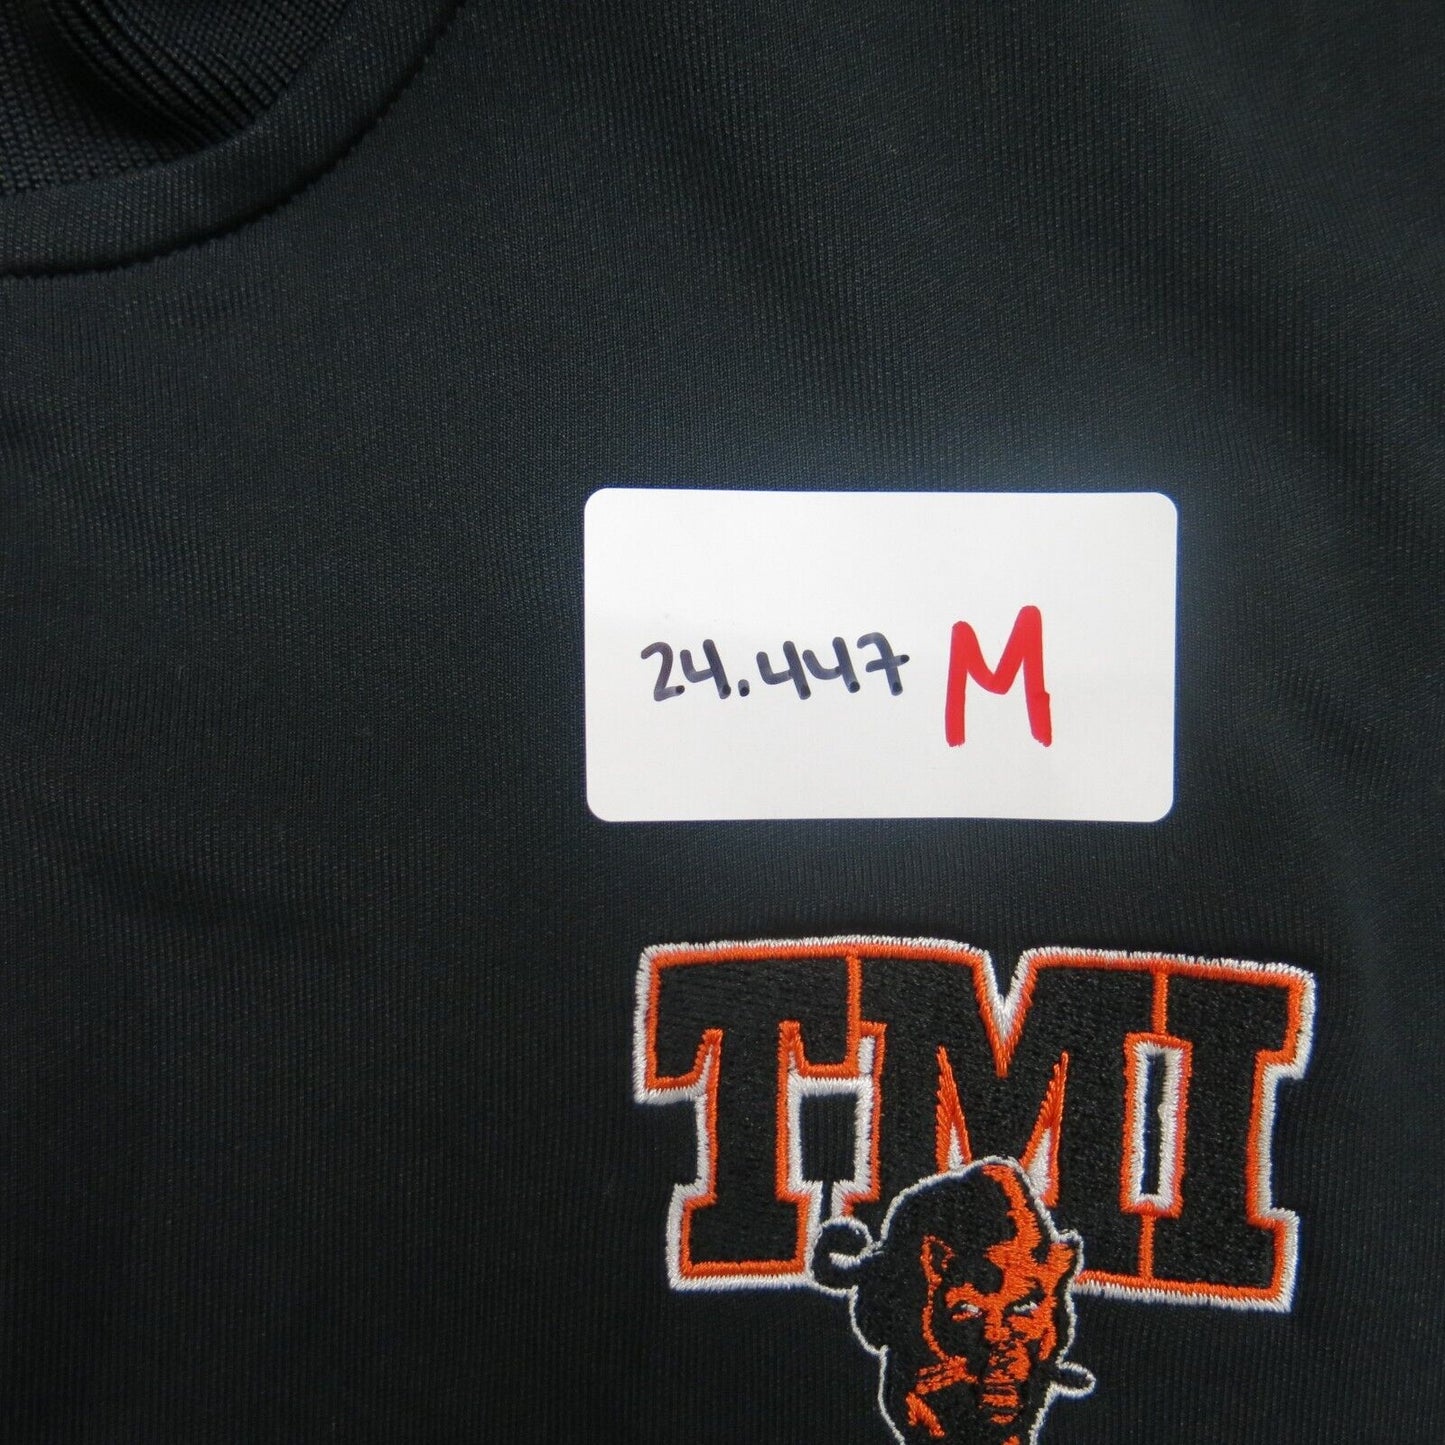 Under Armour Mens Loose Fit Heat Gear Polo Shirt Collared TMI logo Black SZ S